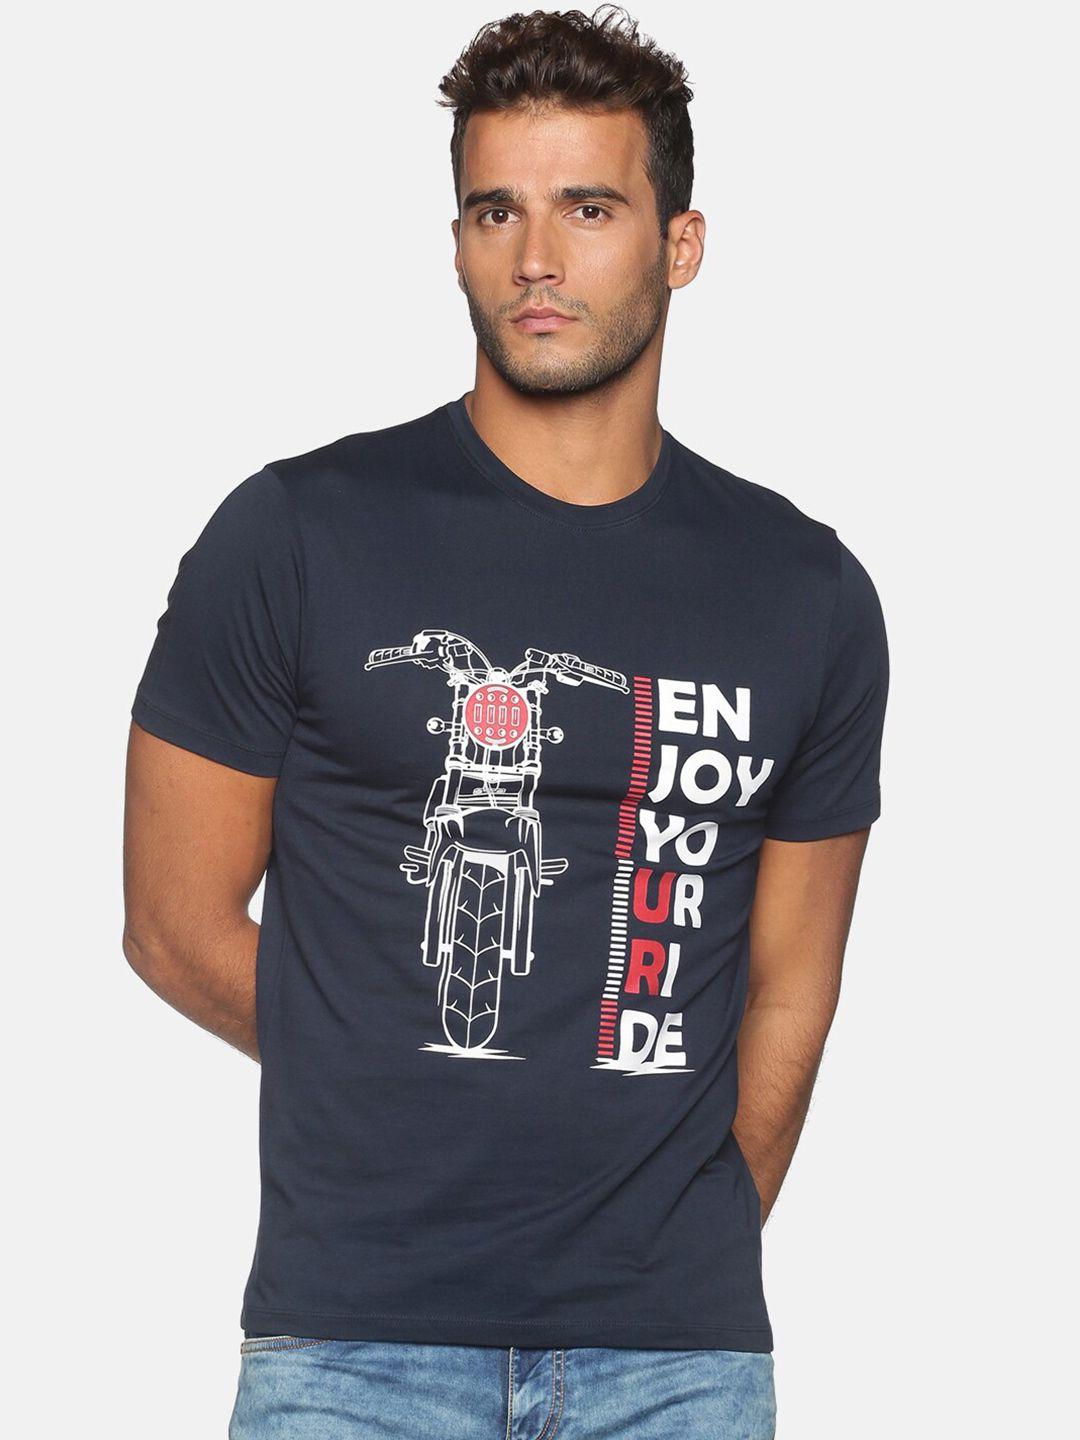 urgear men navy blue printed applique t-shirt